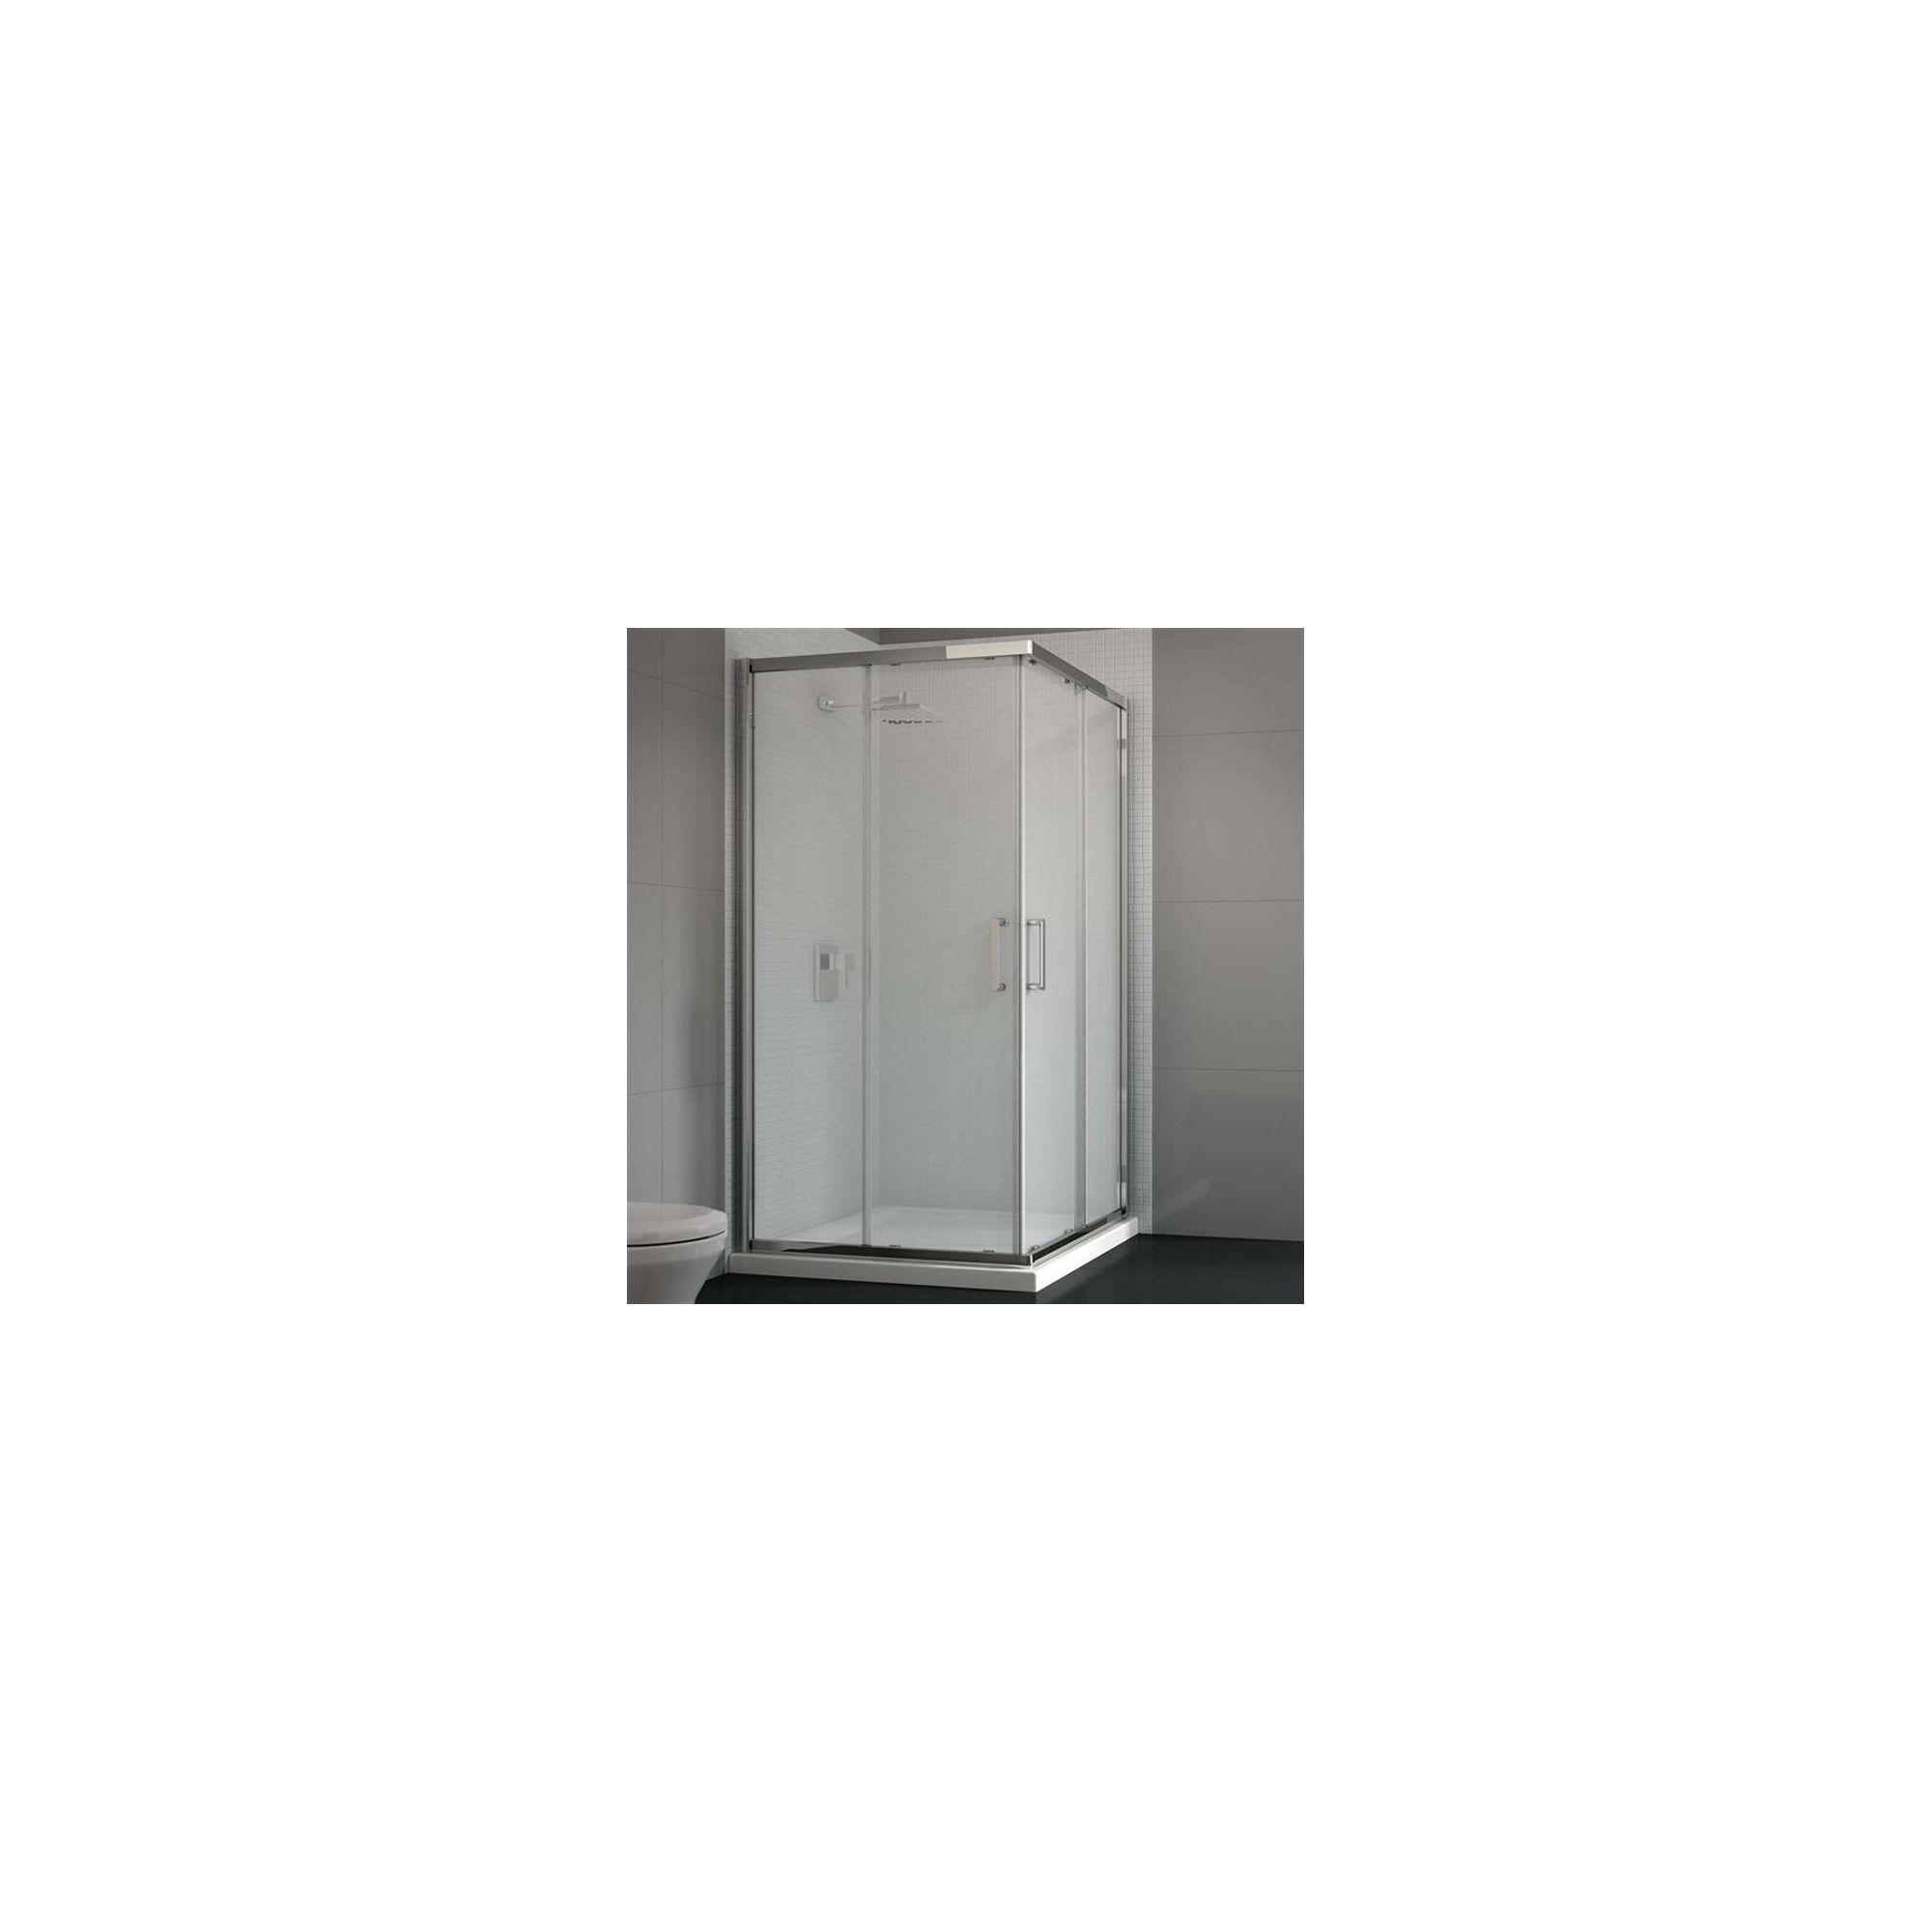 Merlyn Vivid Six Corner Entry Shower Door, 900mm x 900mm, 6mm Glass at Tesco Direct